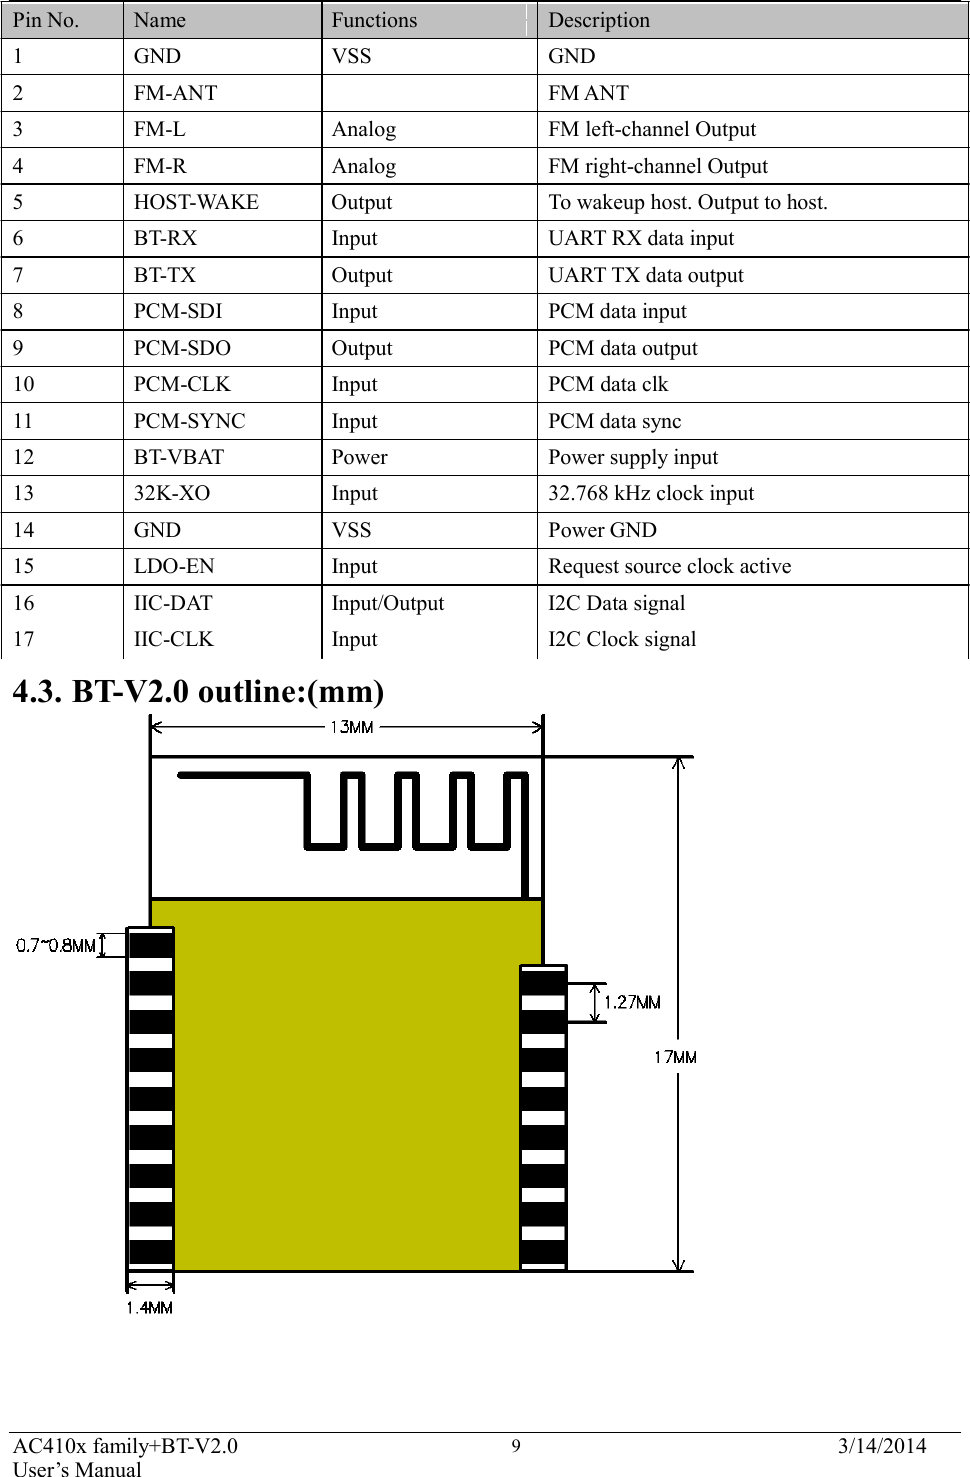 AC410x family+BT-V2.0 User’s Manual 3/14/2014 9                           Pin No.  Name  Functions  Description  1  GND  VSS  GND  2  FM-ANT  FM ANT  3  FM-L  Analog  FM left-channel Output  4  FM-R  Analog  FM right-channel Output  5  HOST-WAKE  Output  To wakeup host. Output to host.  6  BT-RX  Input  UART RX data input  7  BT-TX  Output  UART TX data output  8  PCM-SDI  Input  PCM data input  9  PCM-SDO  Output  PCM data output  10  PCM-CLK  Input  PCM data clk  11  PCM-SYNC  Input  PCM data sync  12  BT-VBAT  Power  Power supply input  13  32K-XO  Input  32.768 kHz clock input  14  GND  VSS  Power GND  15  LDO-EN  Input  Request source clock active  16  IIC-DAT  Input/Output  I2C Data signal  17  IIC-CLK  Input  I2C Clock signal  4.3. BT-V2.0 outline:(mm) 